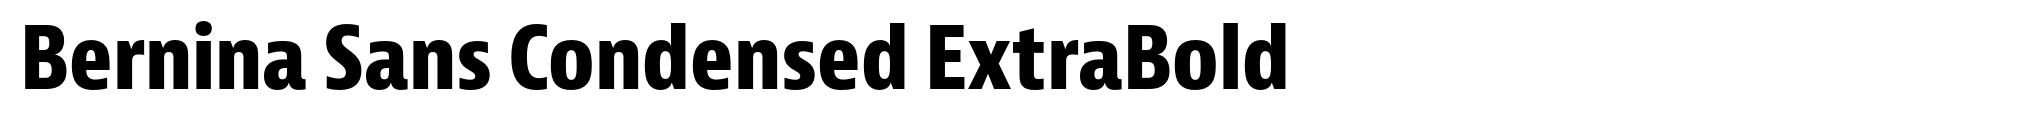 Bernina Sans Condensed ExtraBold image